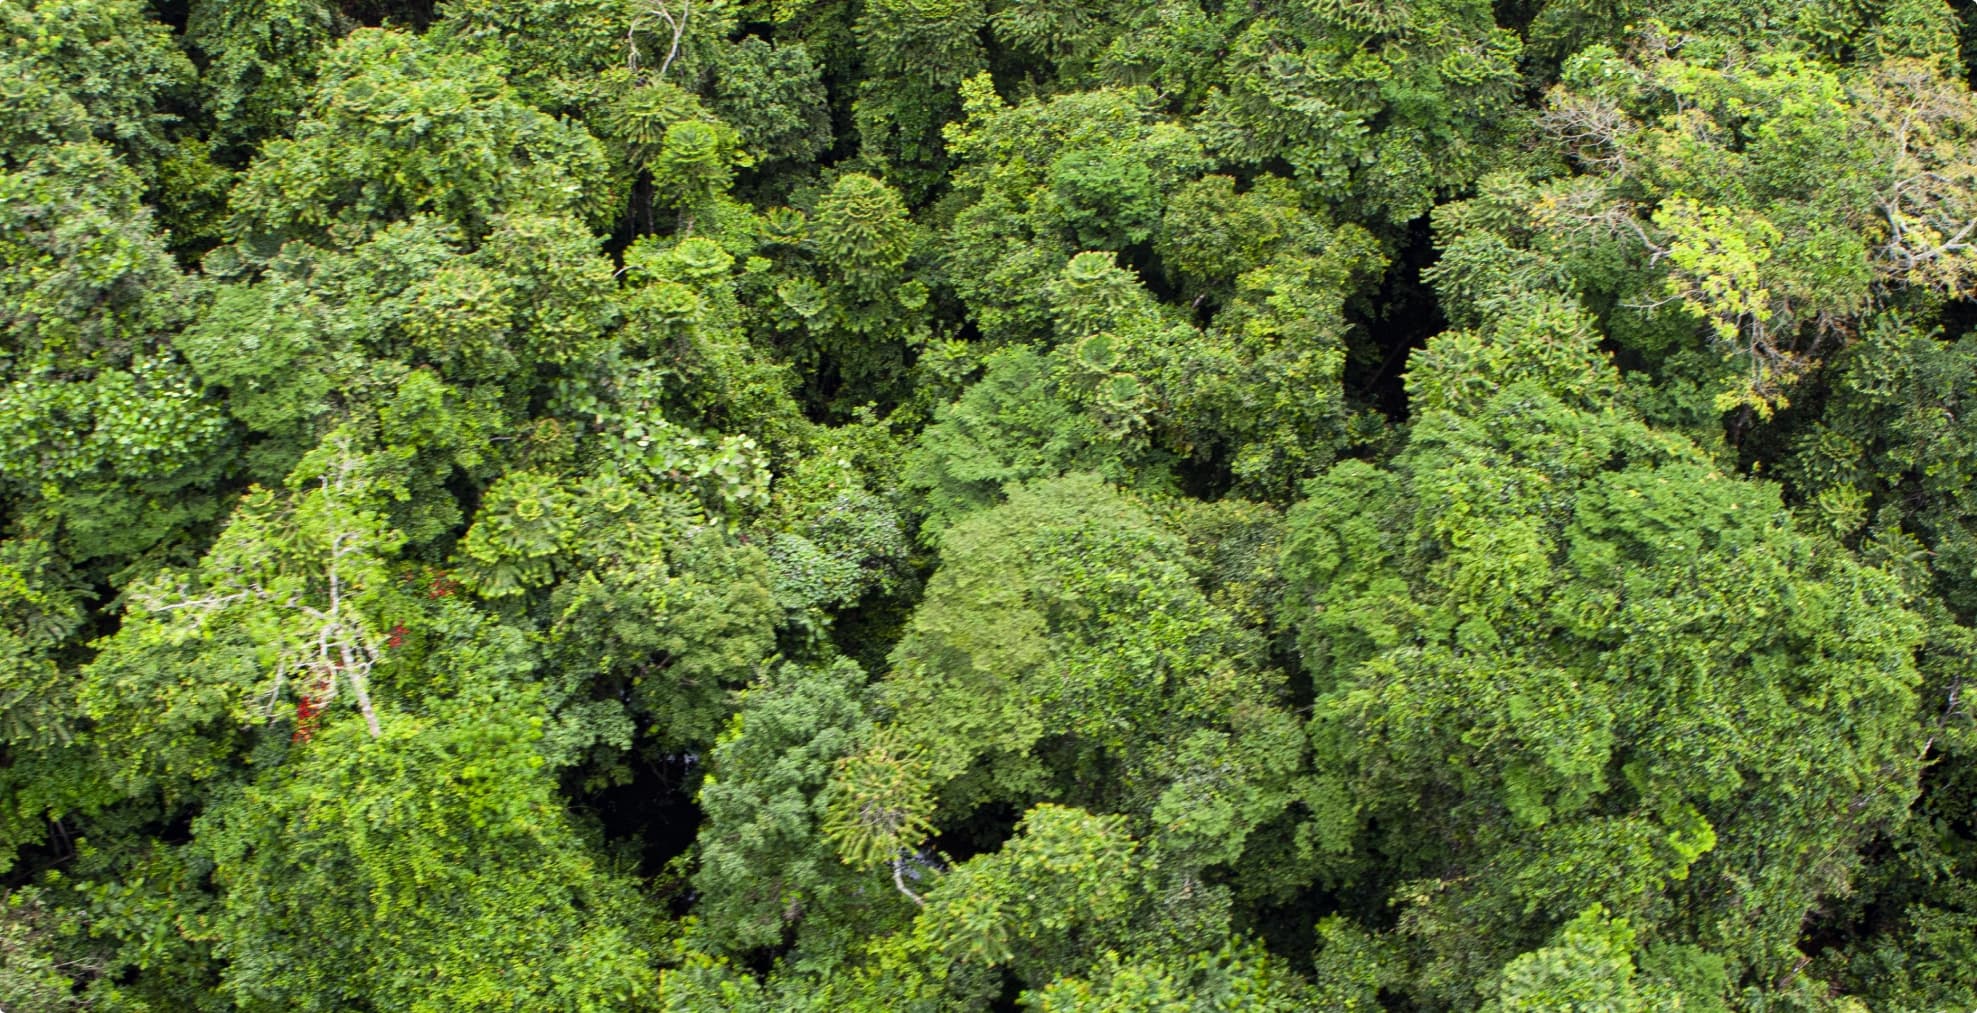 Gabon asks rich countries for money not to cut down its immense rainforest